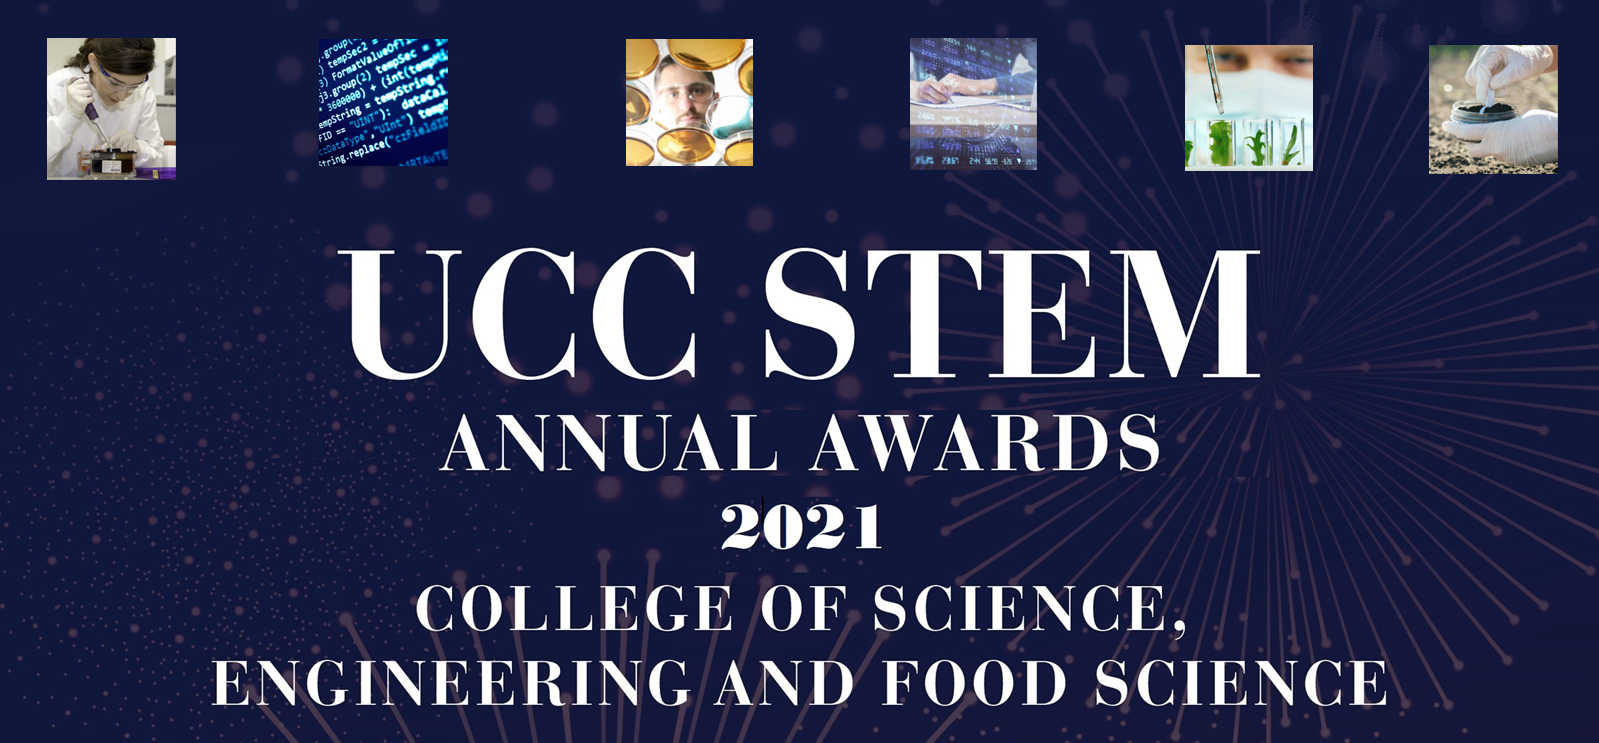 UCC STEM Annual Awards 2021 